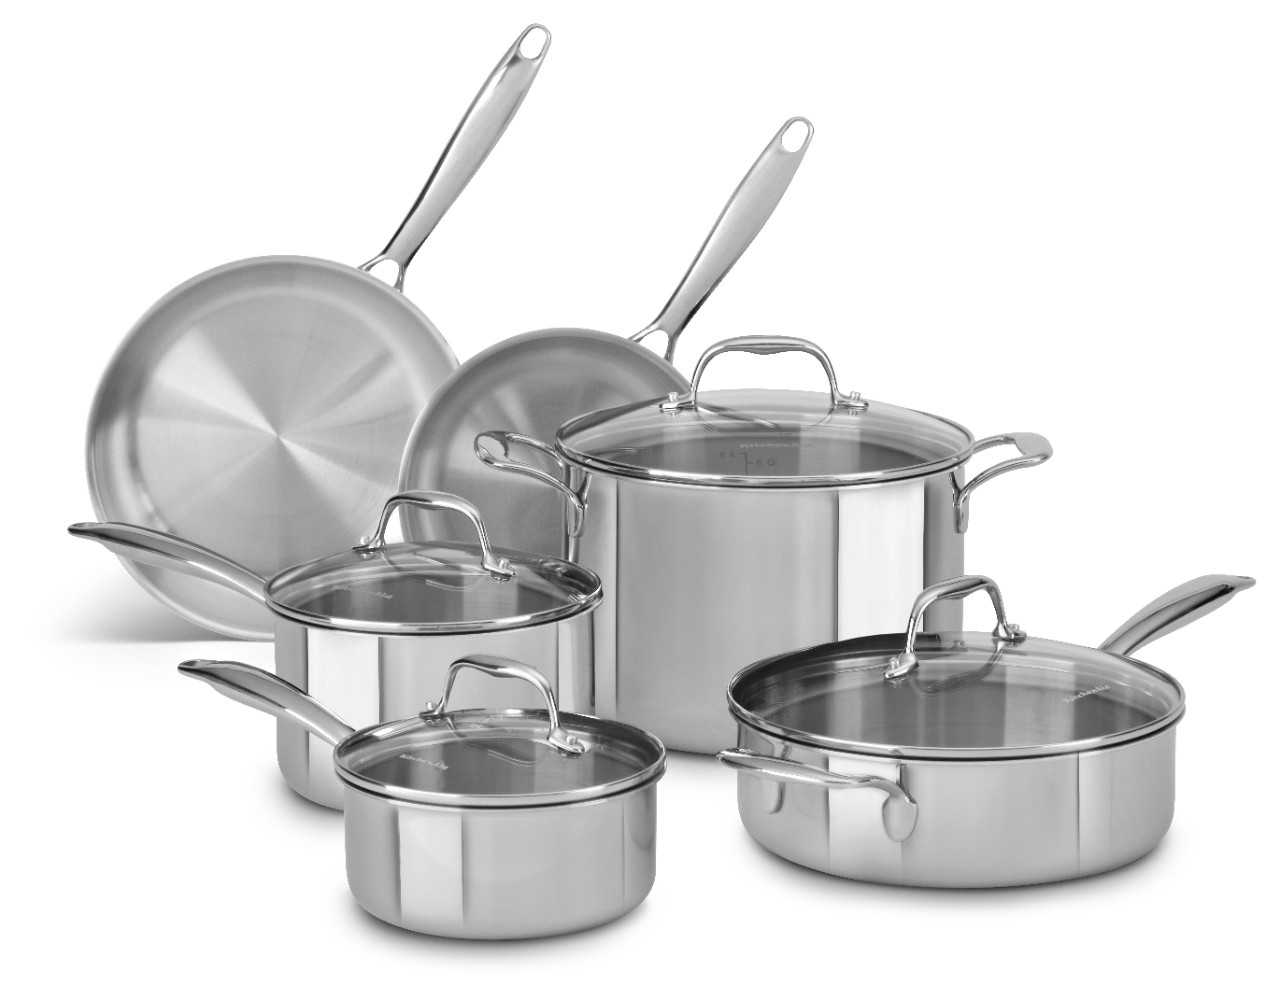 Recieve a free 10-piece KitchenAid® Cookware Set today